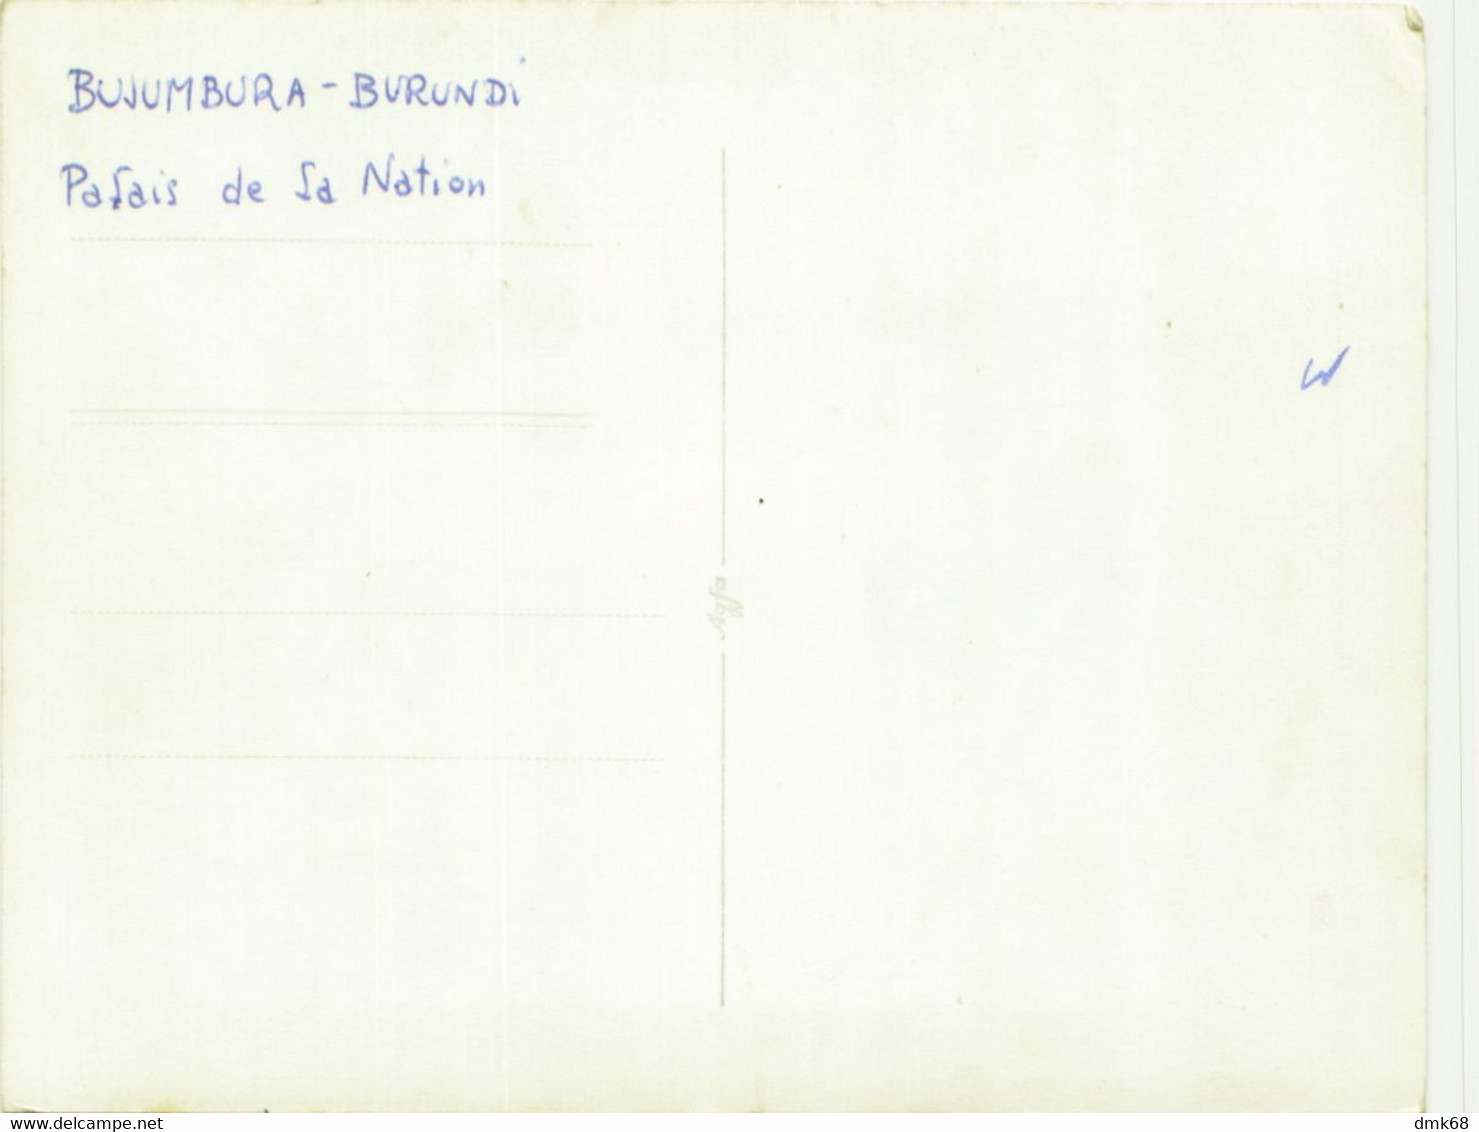 AFRICA - BURUNDI - BUJUMBURA - PALAIS DE LA NATION - PROTOTYPE POSTCARD 1960s (11809) - Burundi